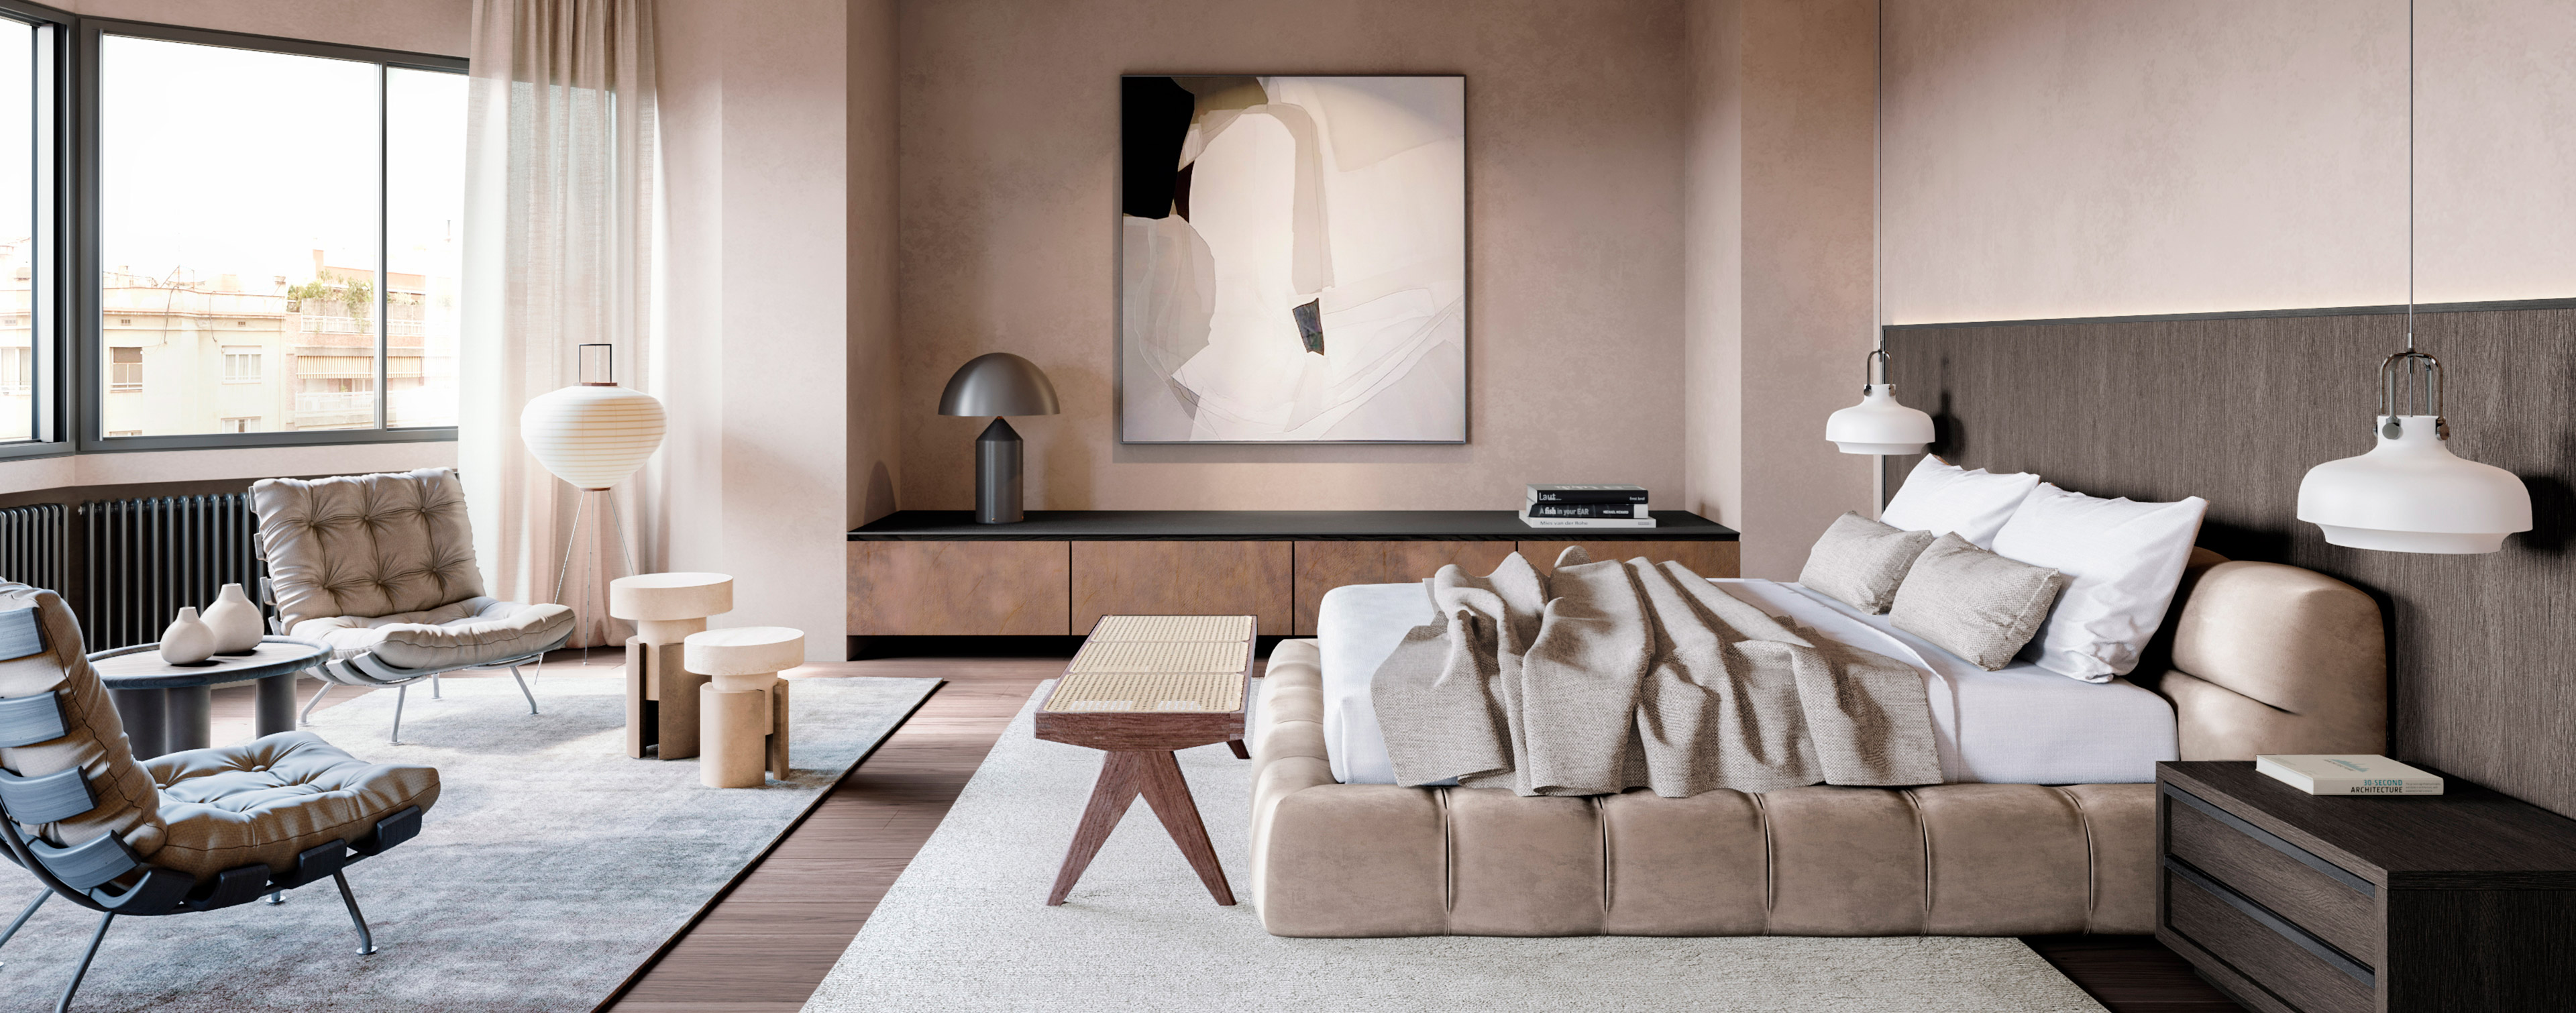 luv studio luxury architects barcelona turo park apartment IMG 01 - LUV Studio - Architecture et design - Barcelone